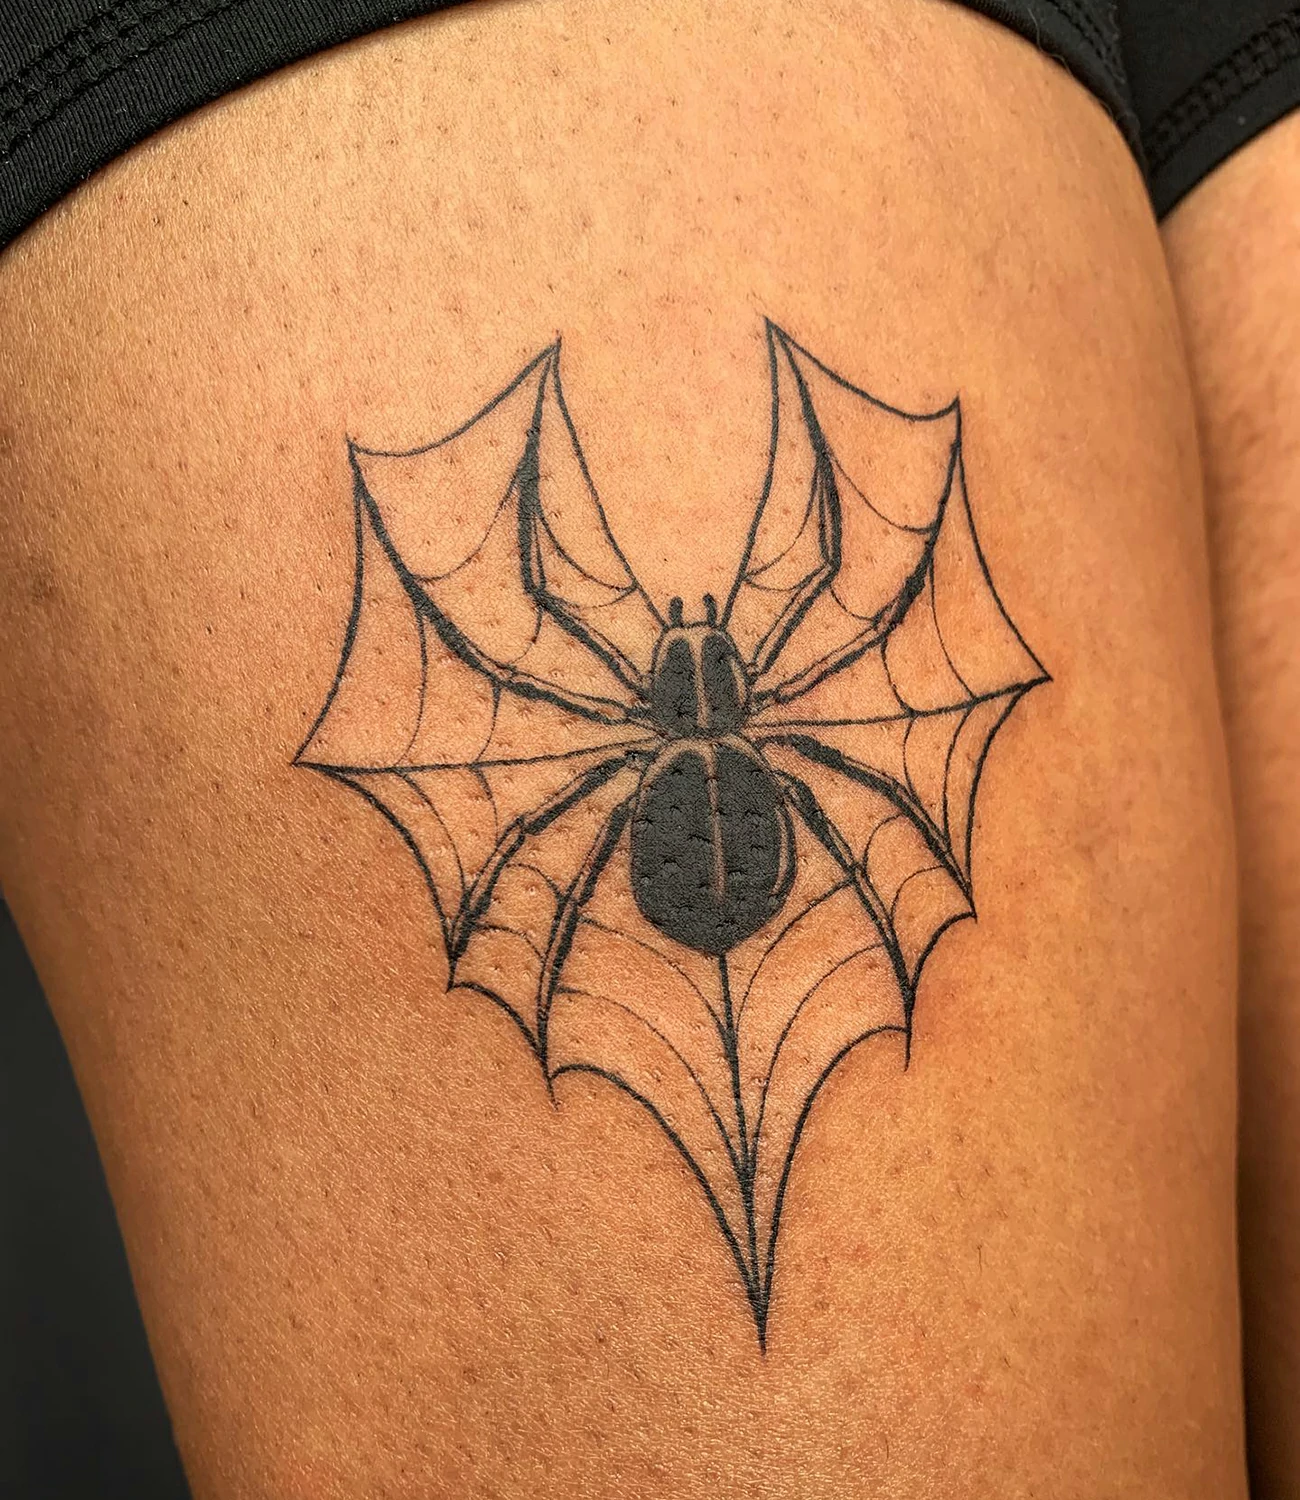 Heart spider web tattoo